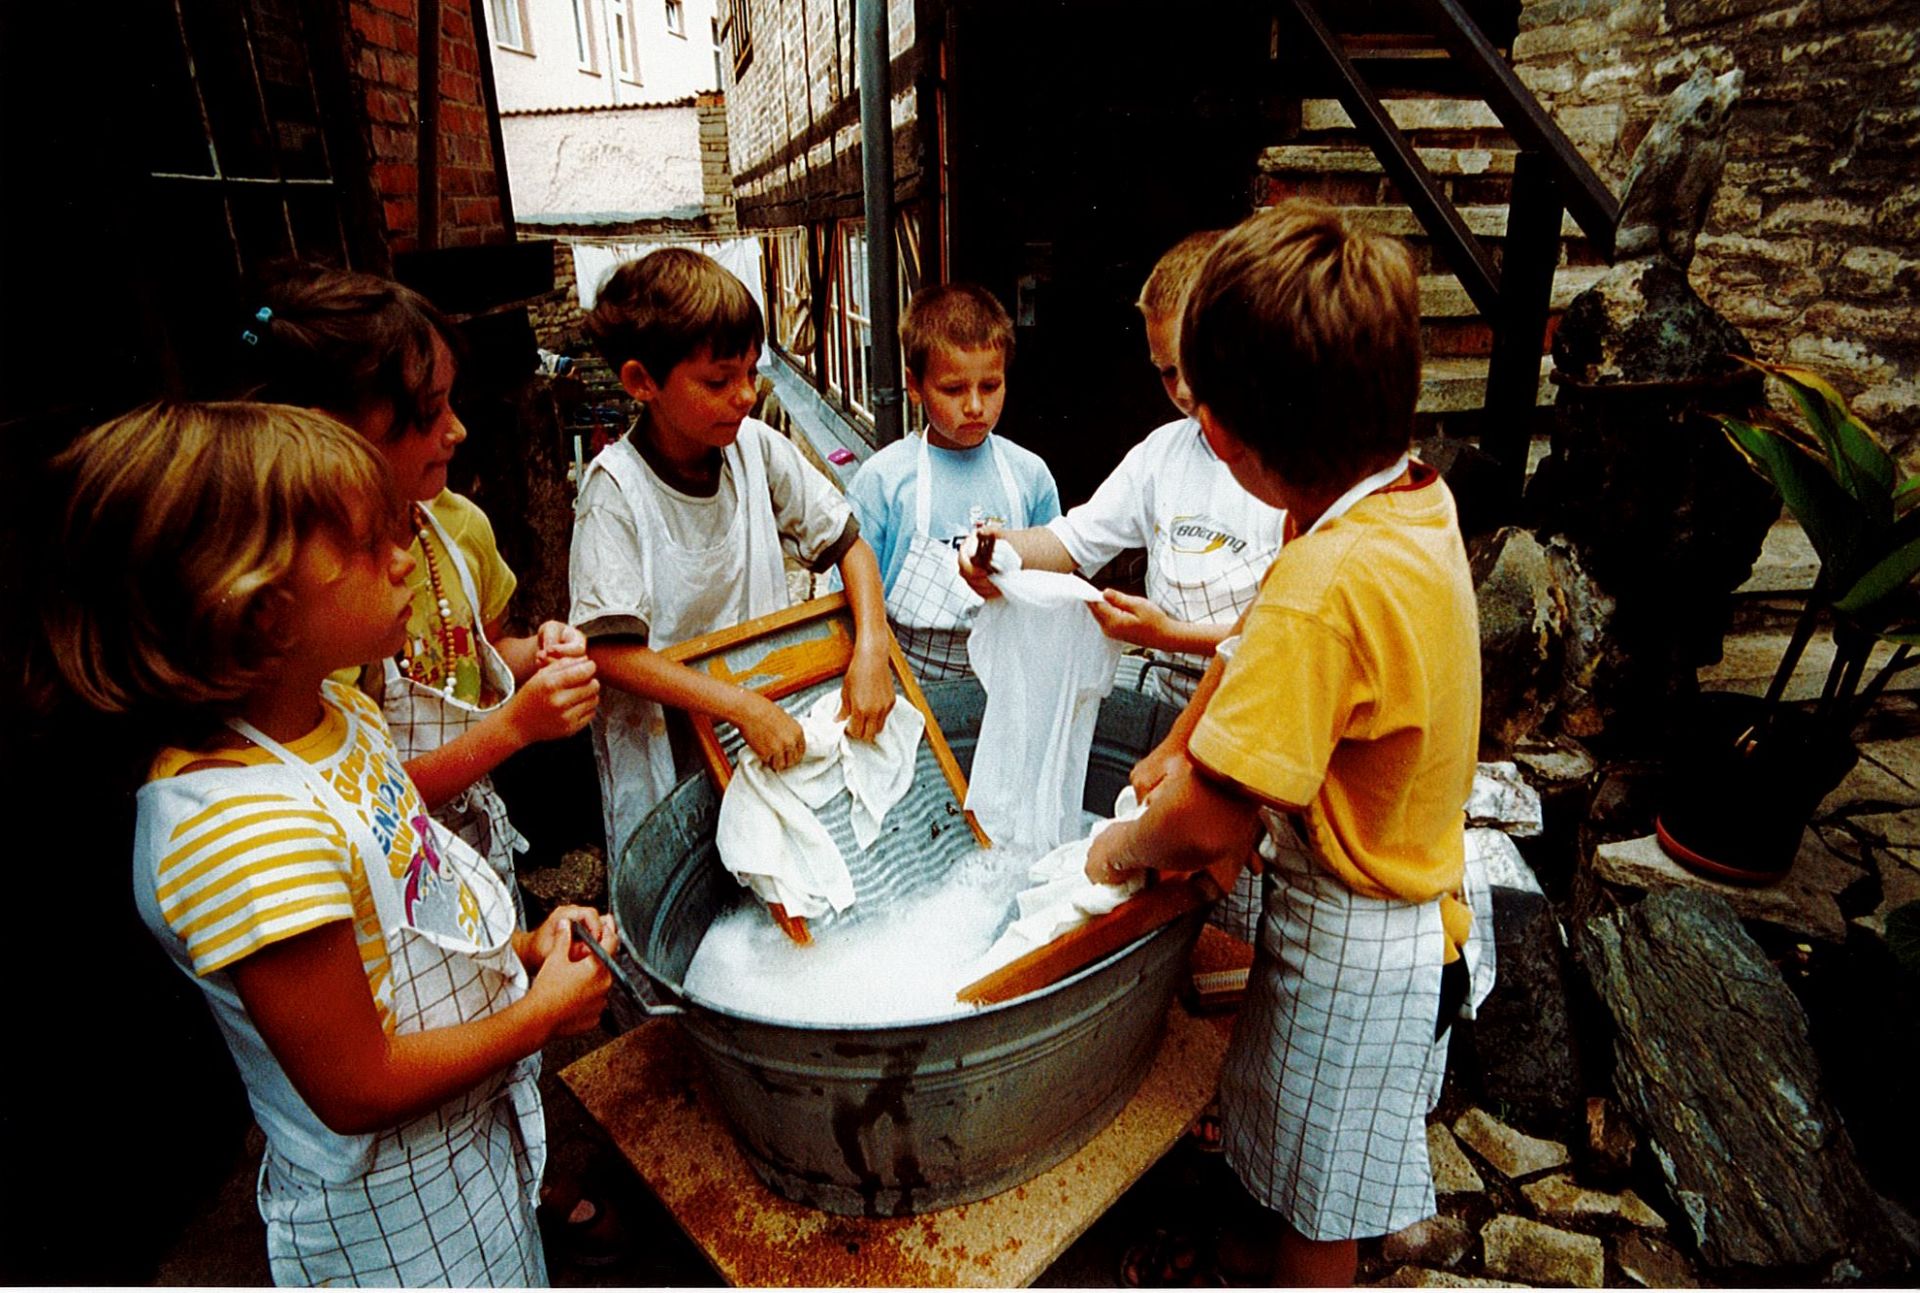 Children's programme: Washing day with the Spengler family